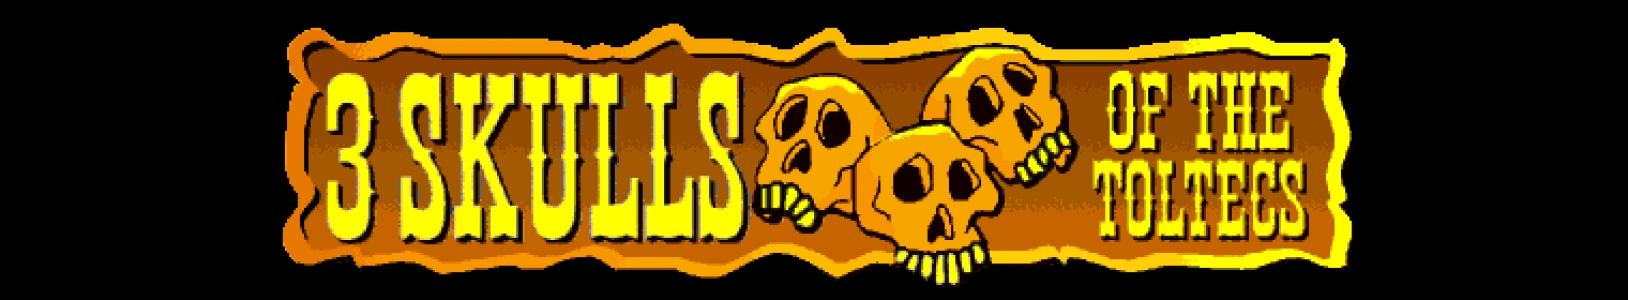 3 Skulls of the Toltecs banner